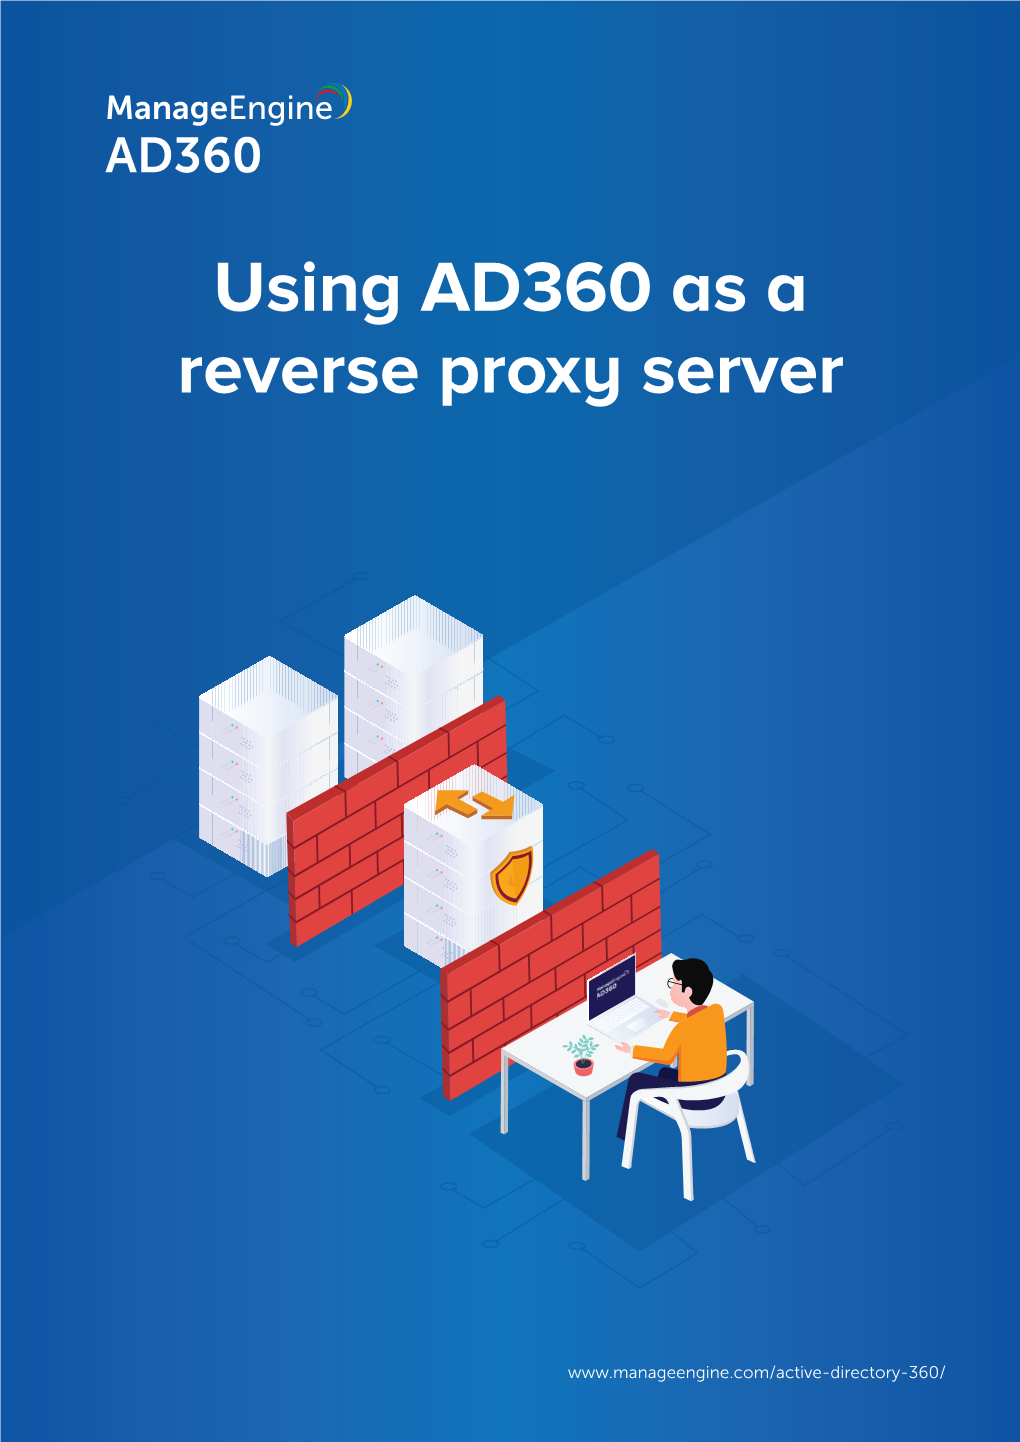 Using AD360 As a Reverse Proxy Server